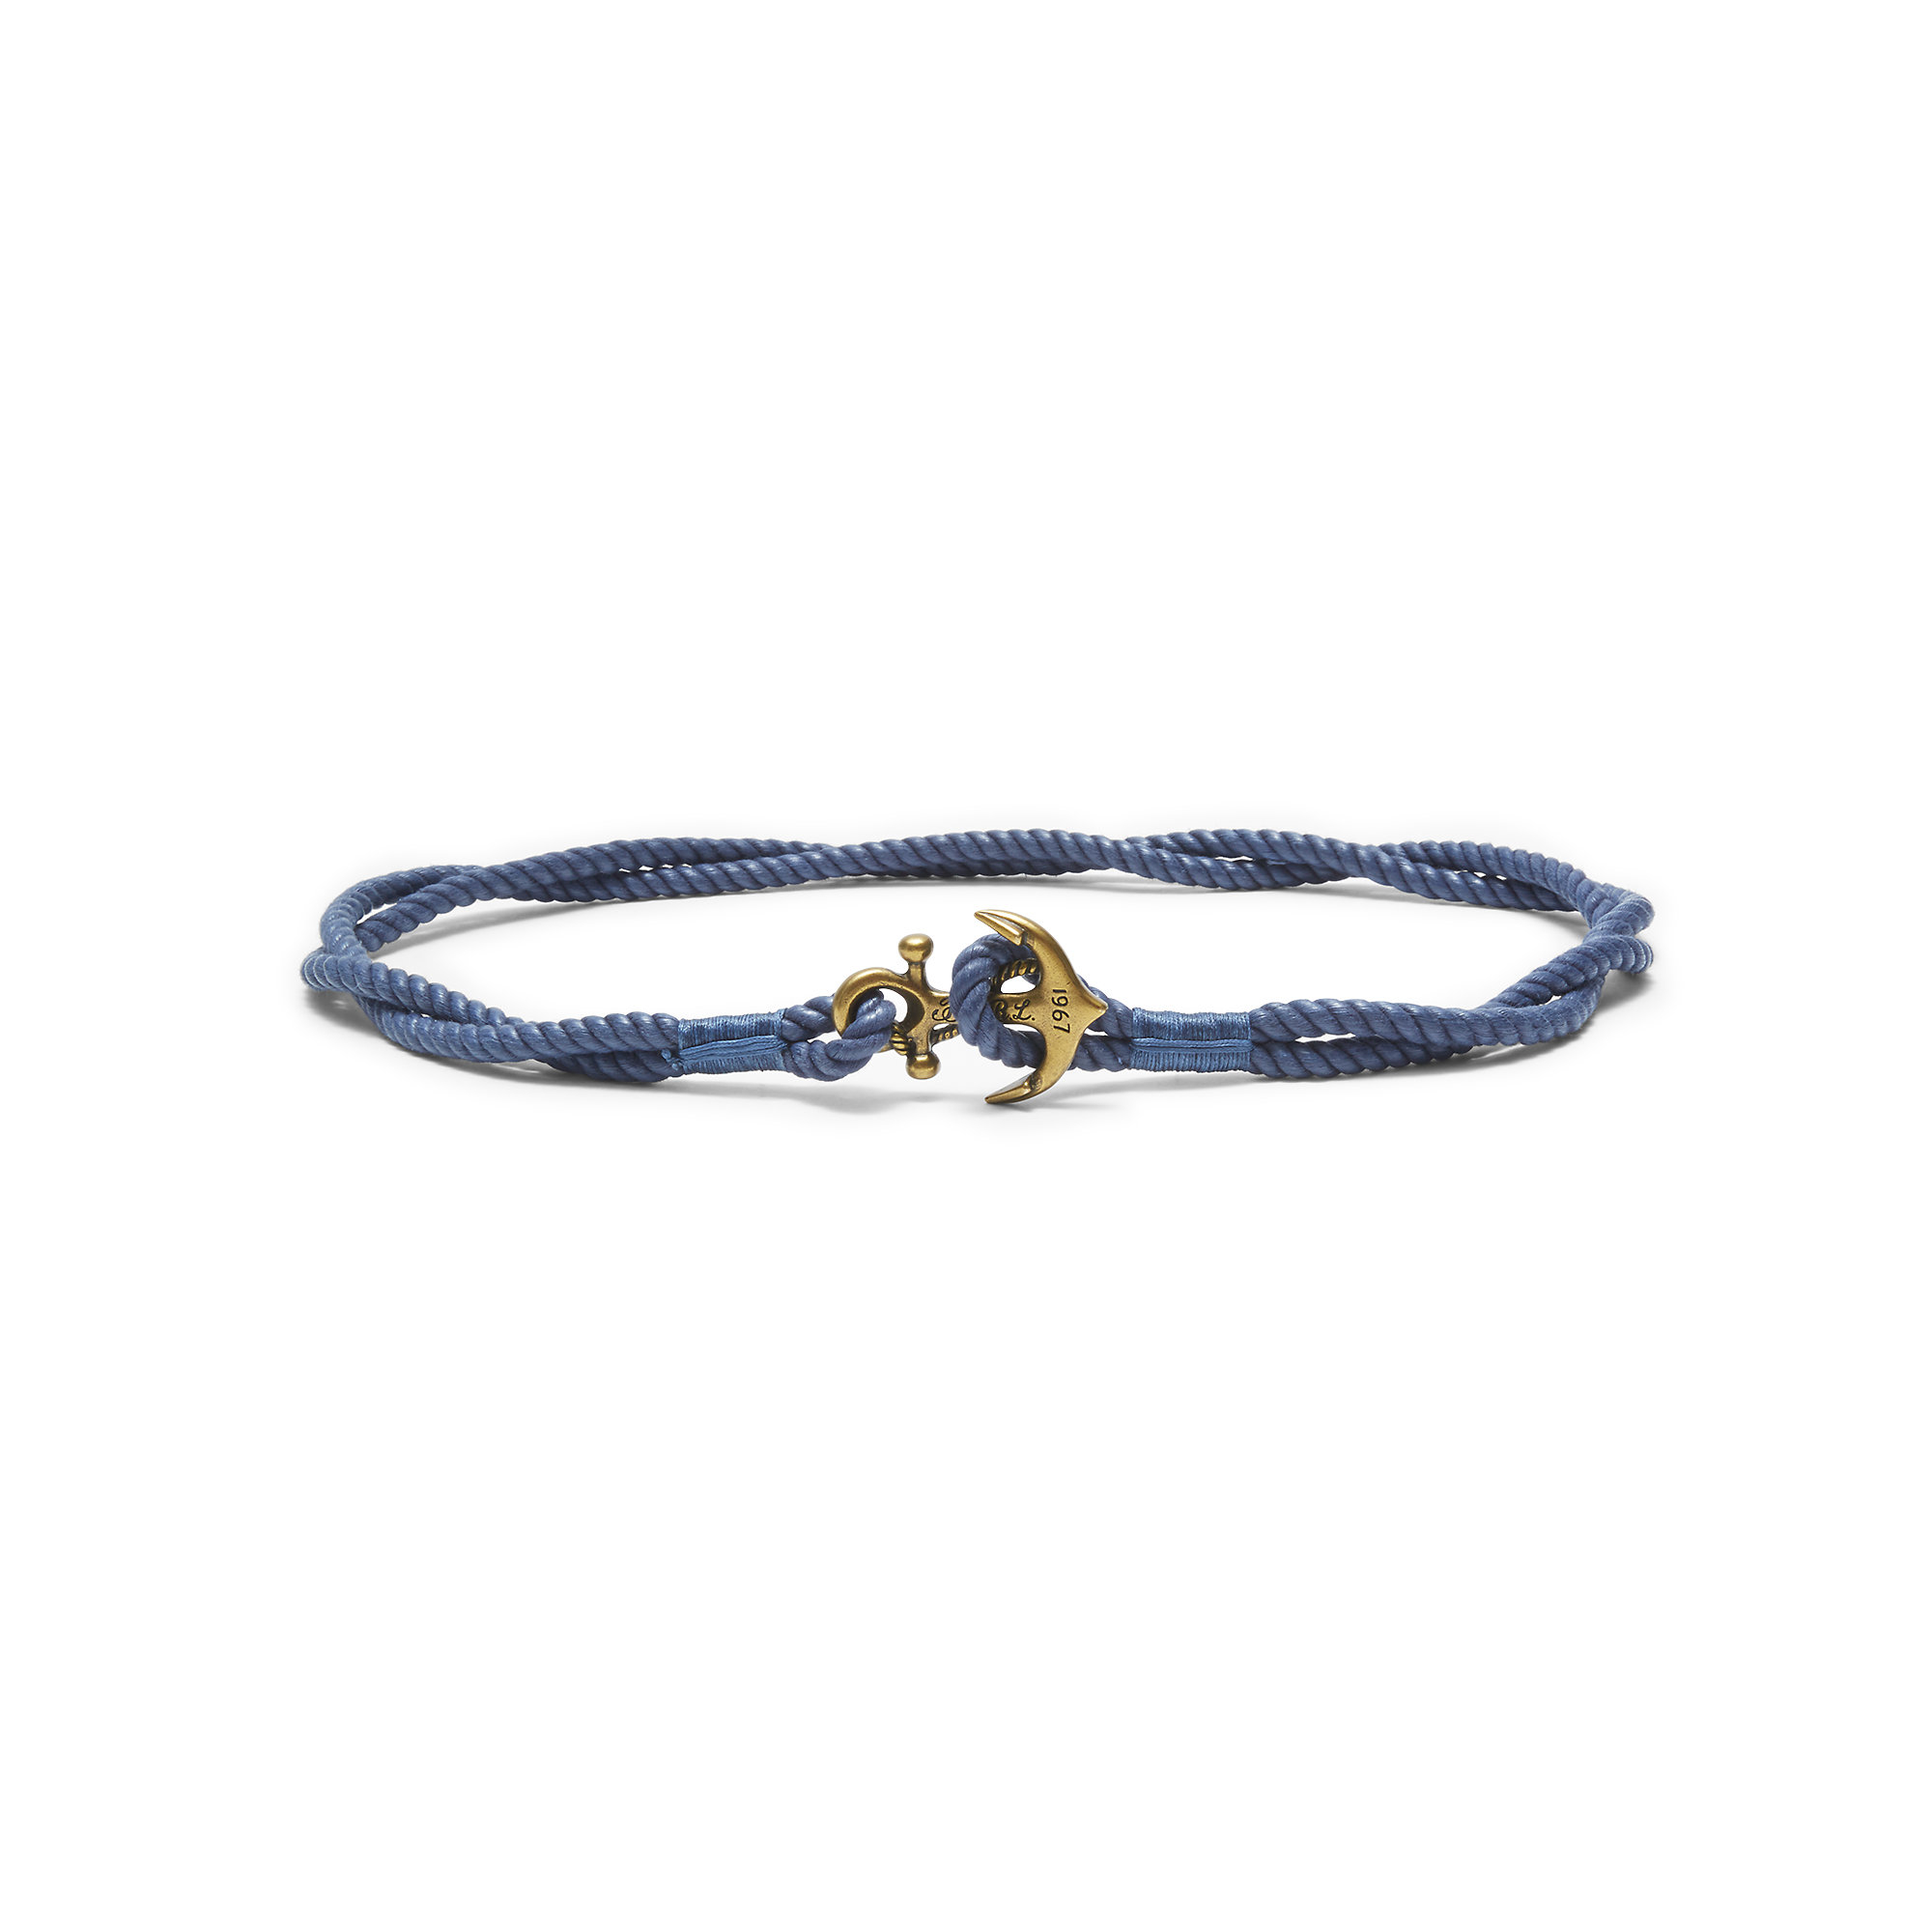 Polo Ralph Lauren Anchor Rope Belt in Blue for Men - Lyst